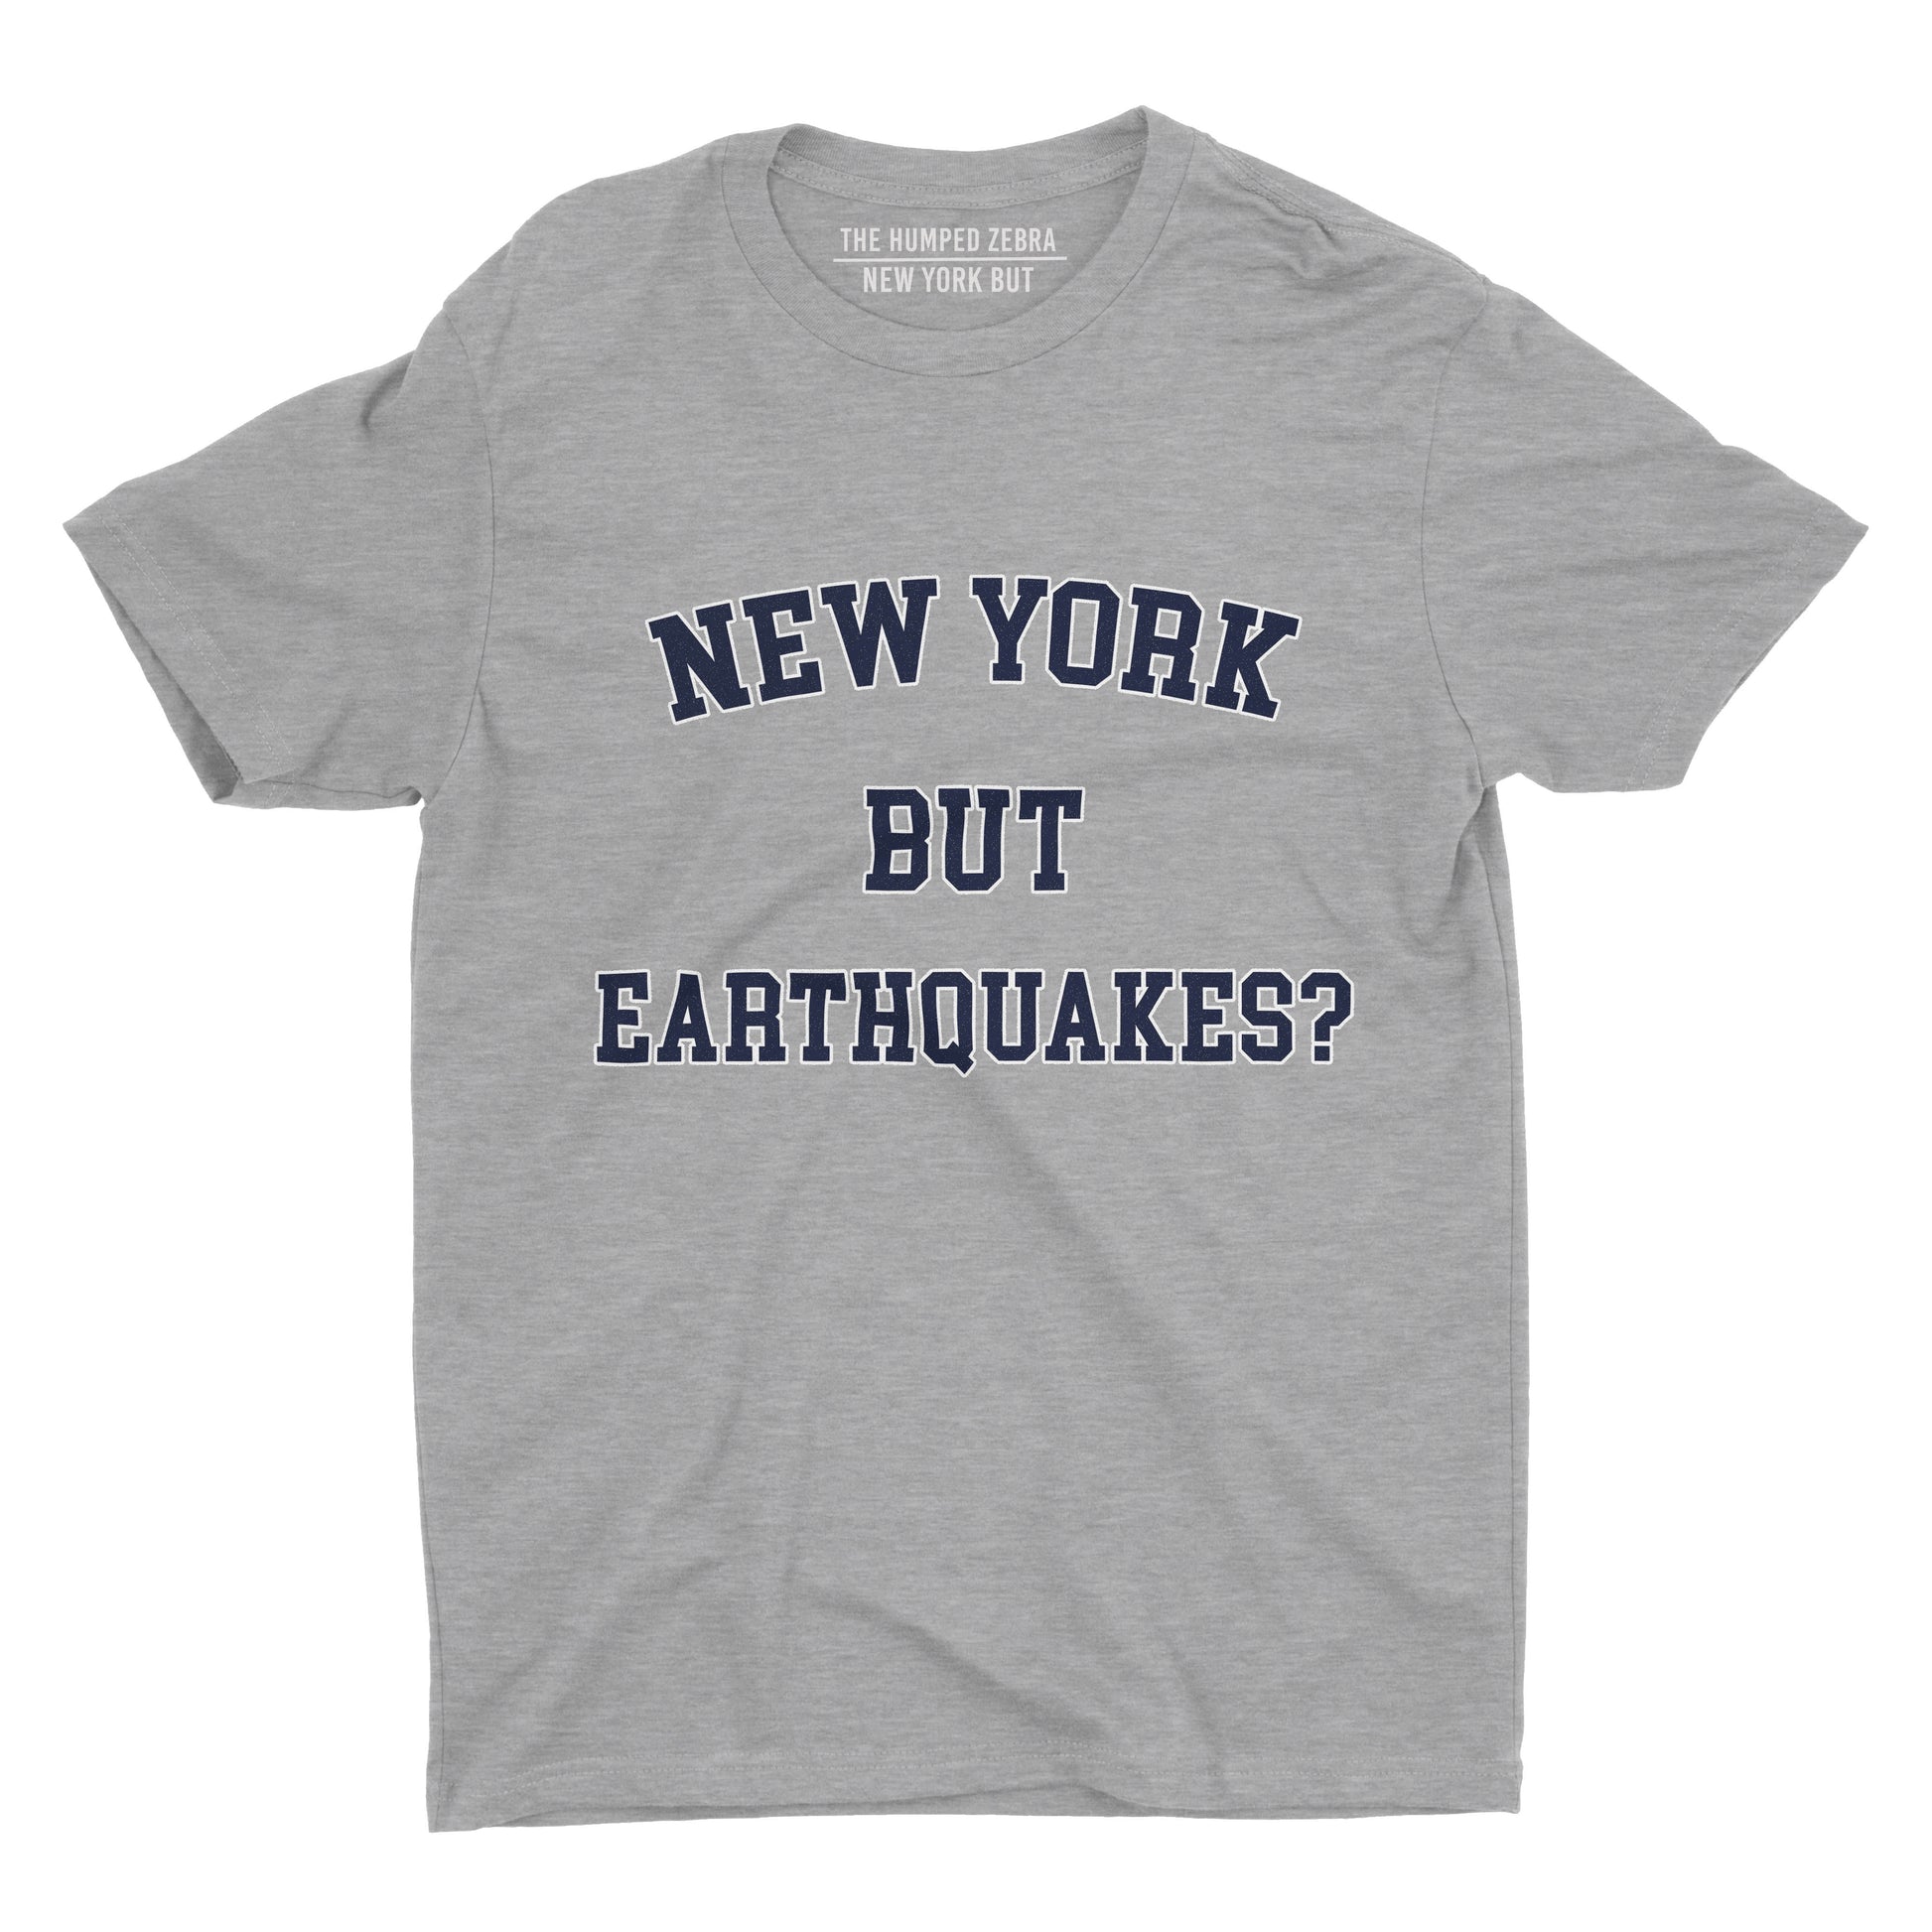 New york but earthquakes short sleeve adult tshirt grey